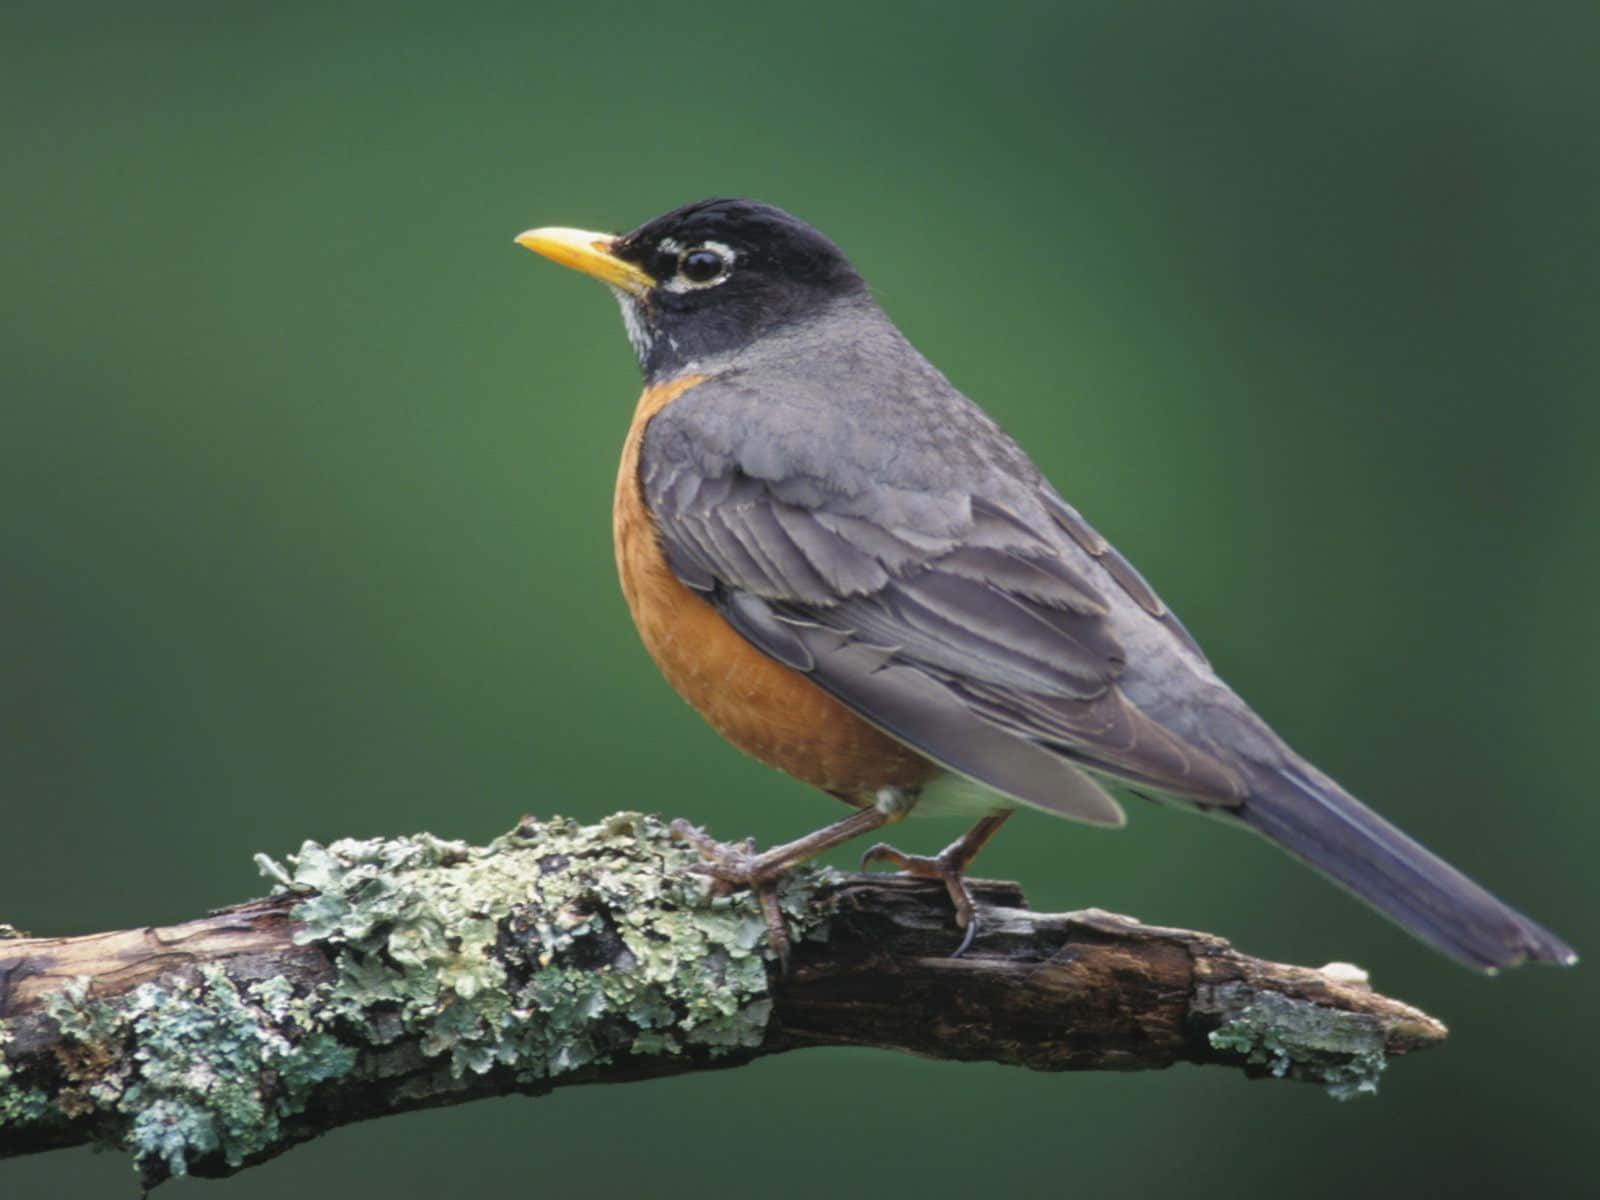 An adult robin in a spring garden